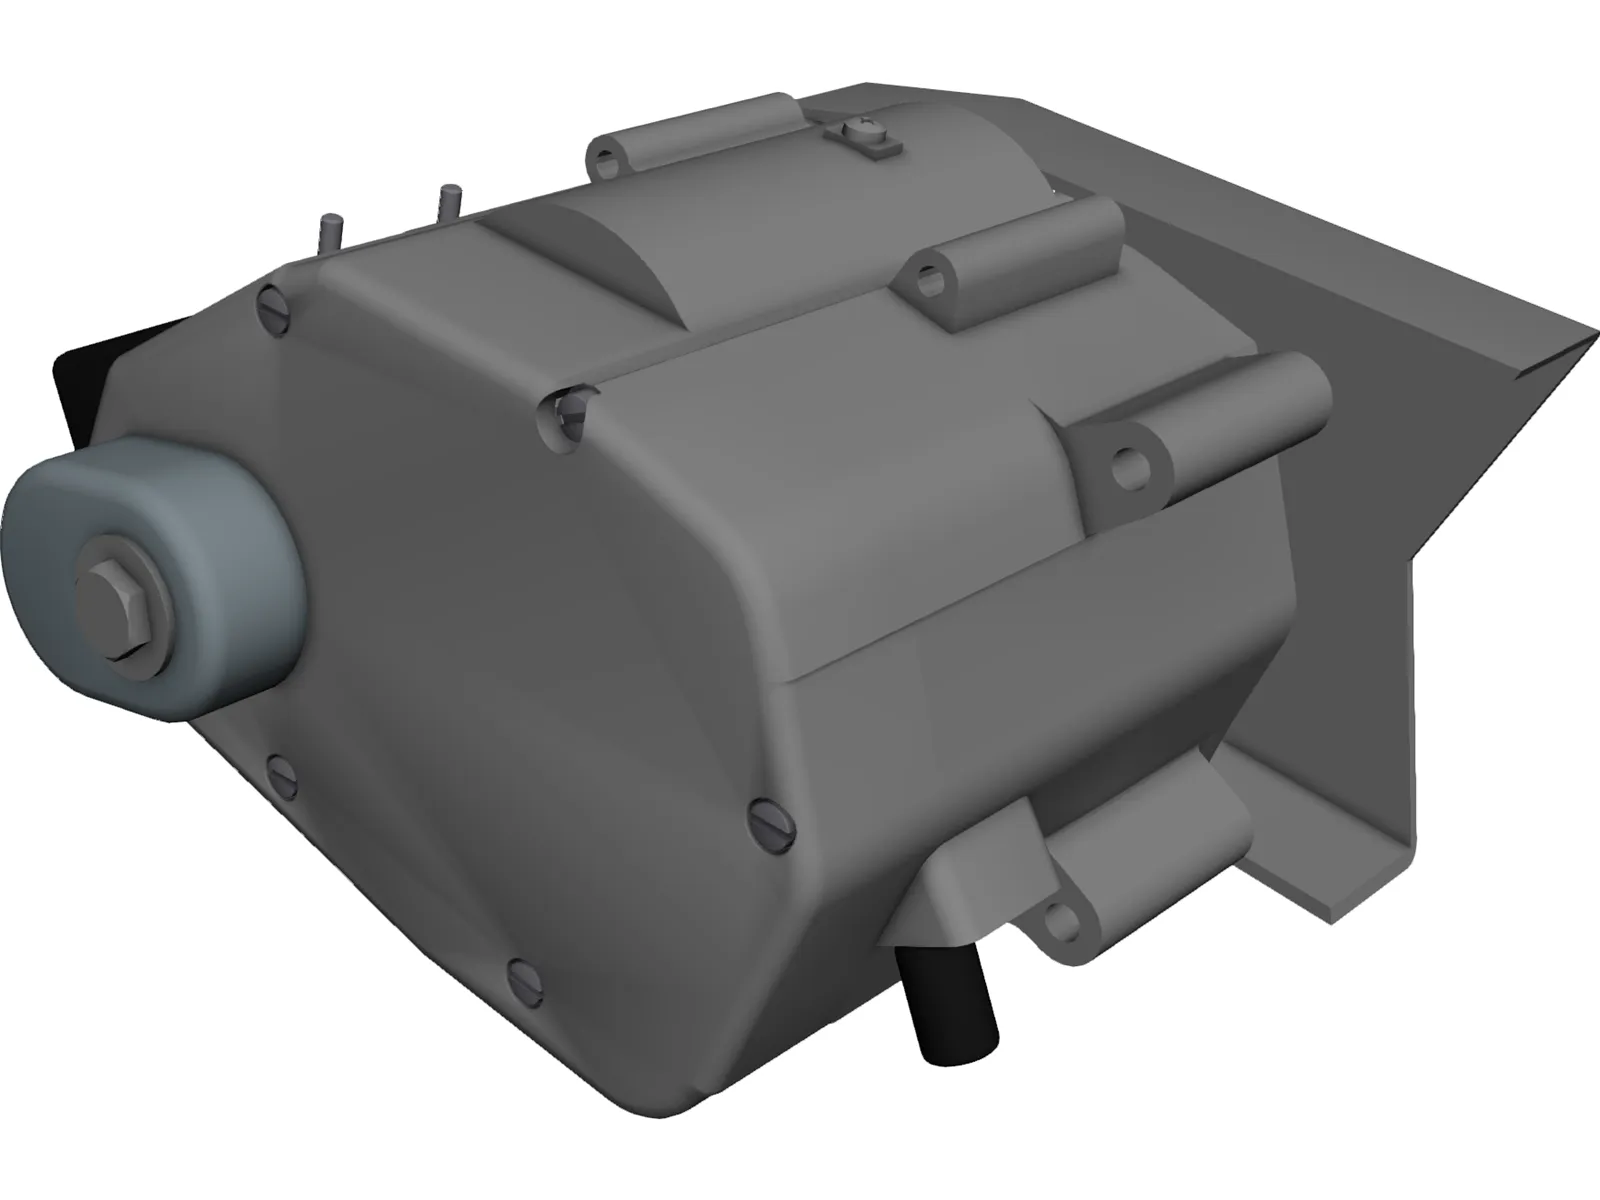 Tomos APN 6 Engine 3D Model